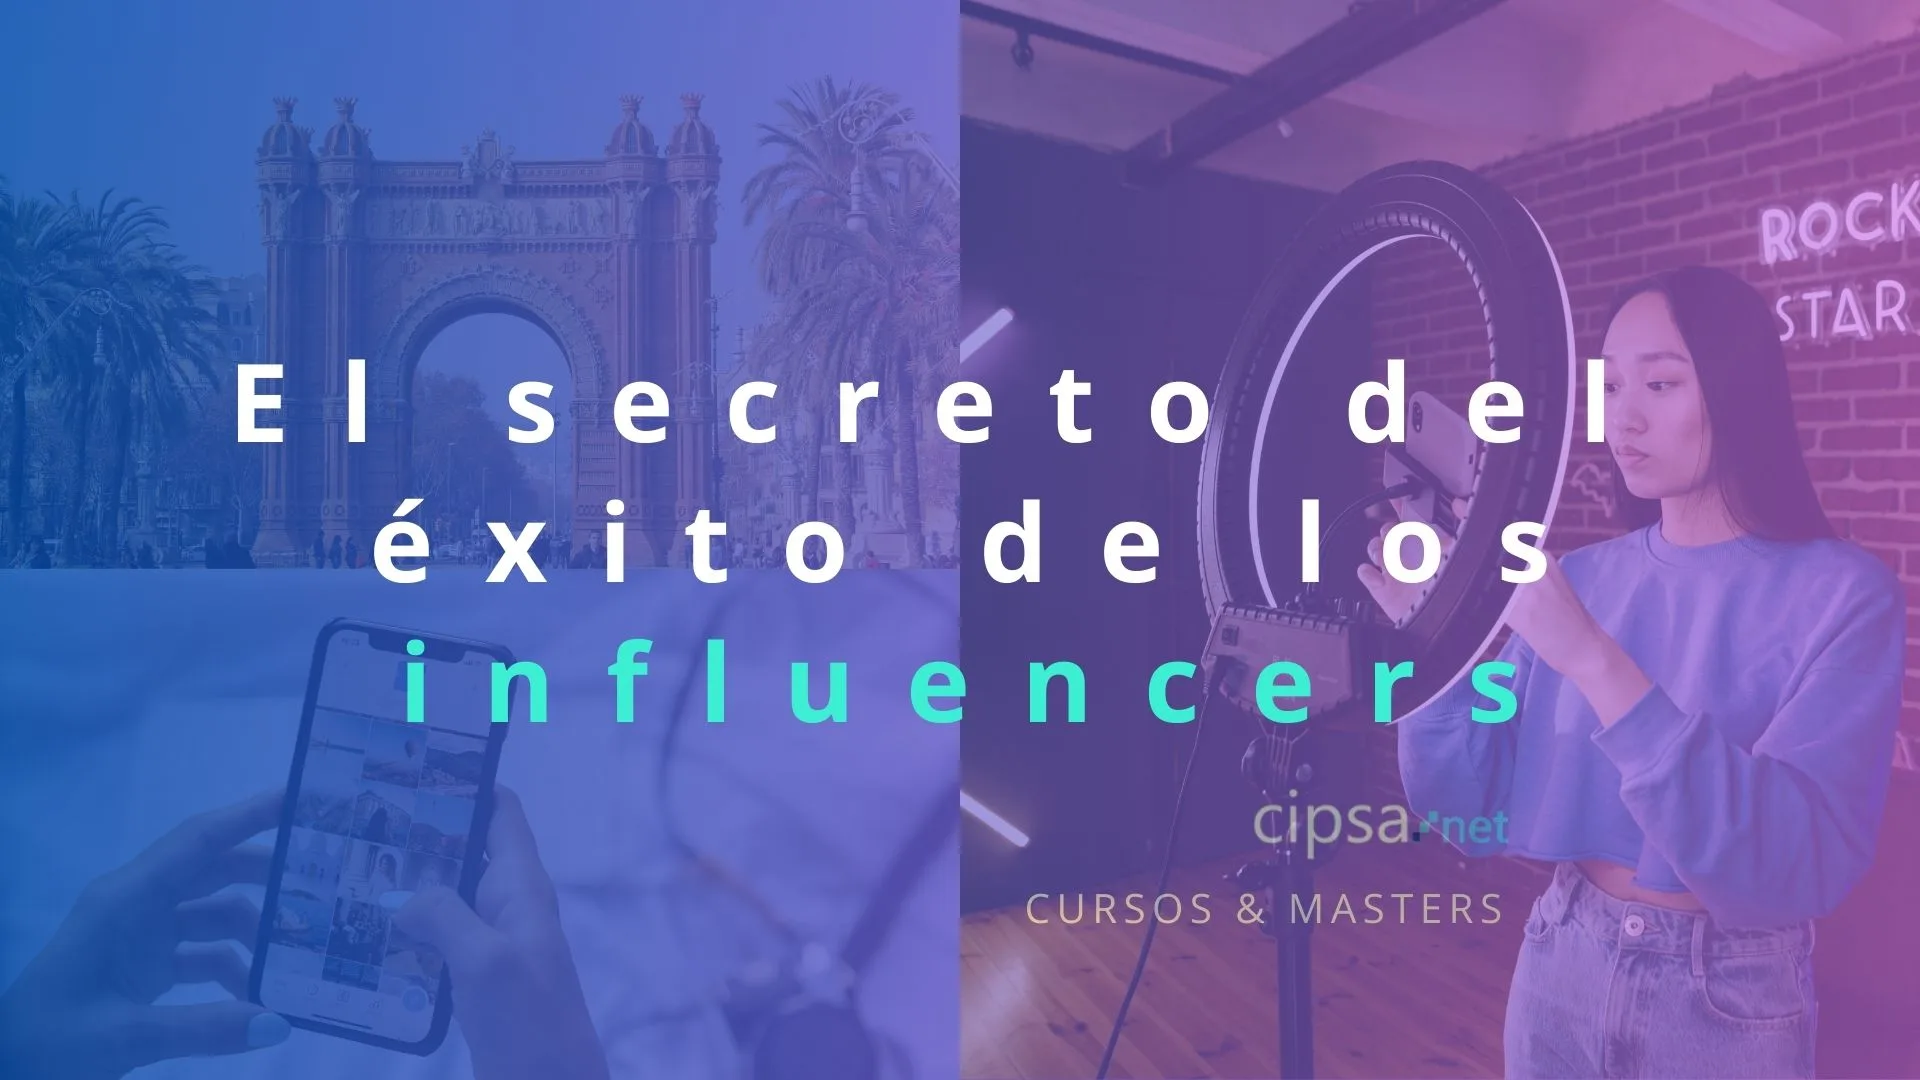 tips secreto exito influencer top barcelona cursos marketing digital community manager plan estrategia contenidos digitales monetización